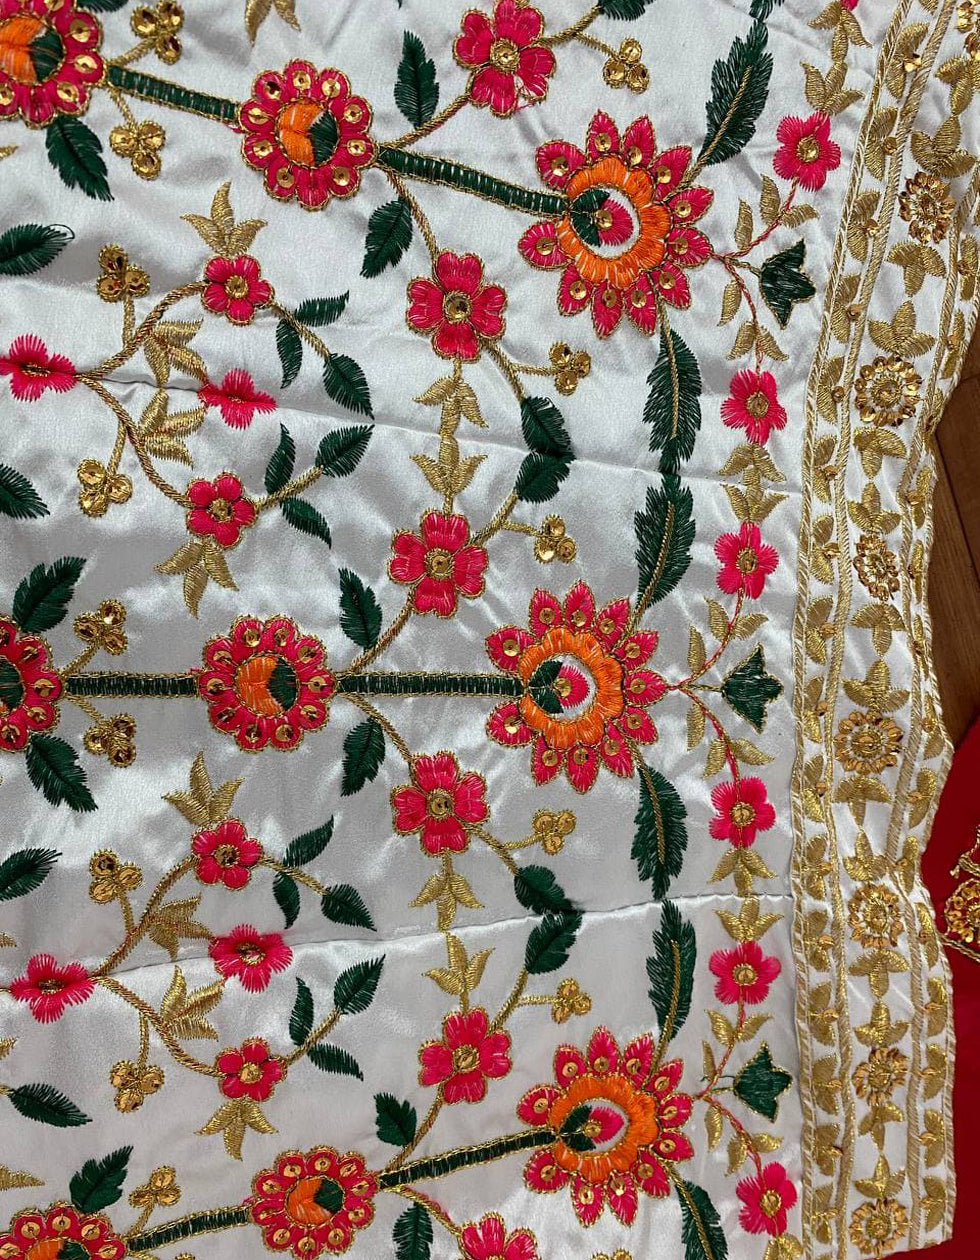 Wedding Wear White & Maroon Floral Embroidered Lehenga With Zari Work